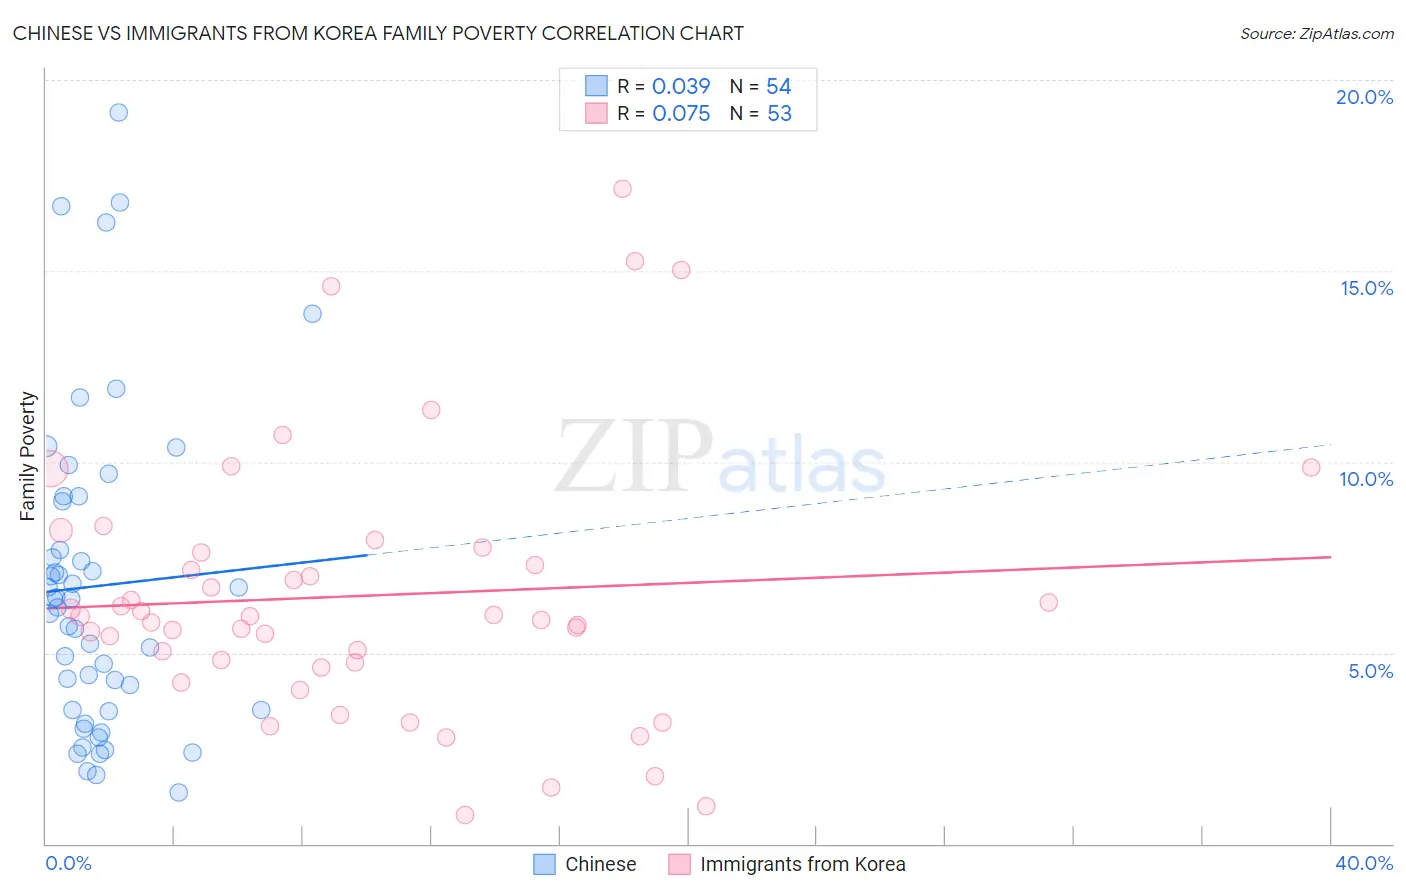 Chinese vs Immigrants from Korea Family Poverty